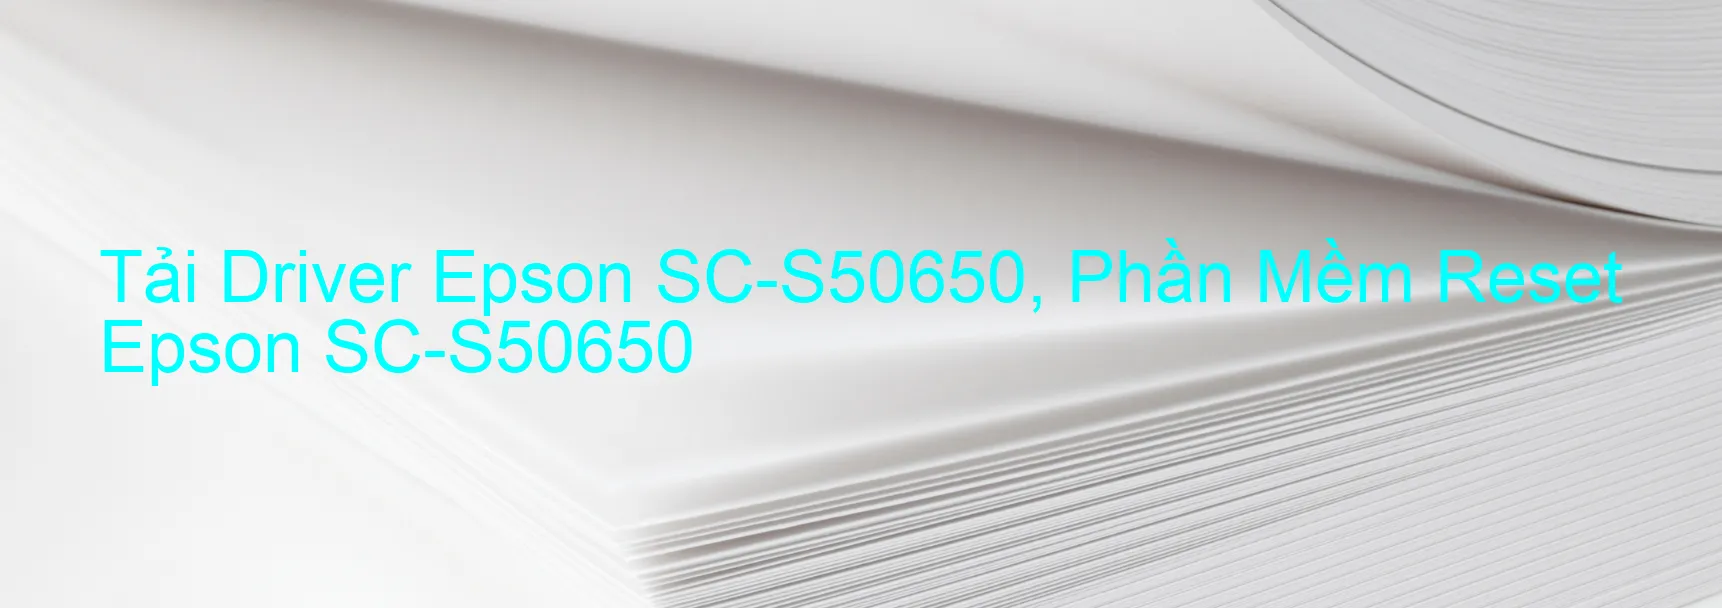 Driver Epson SC-S50650, Phần Mềm Reset Epson SC-S50650